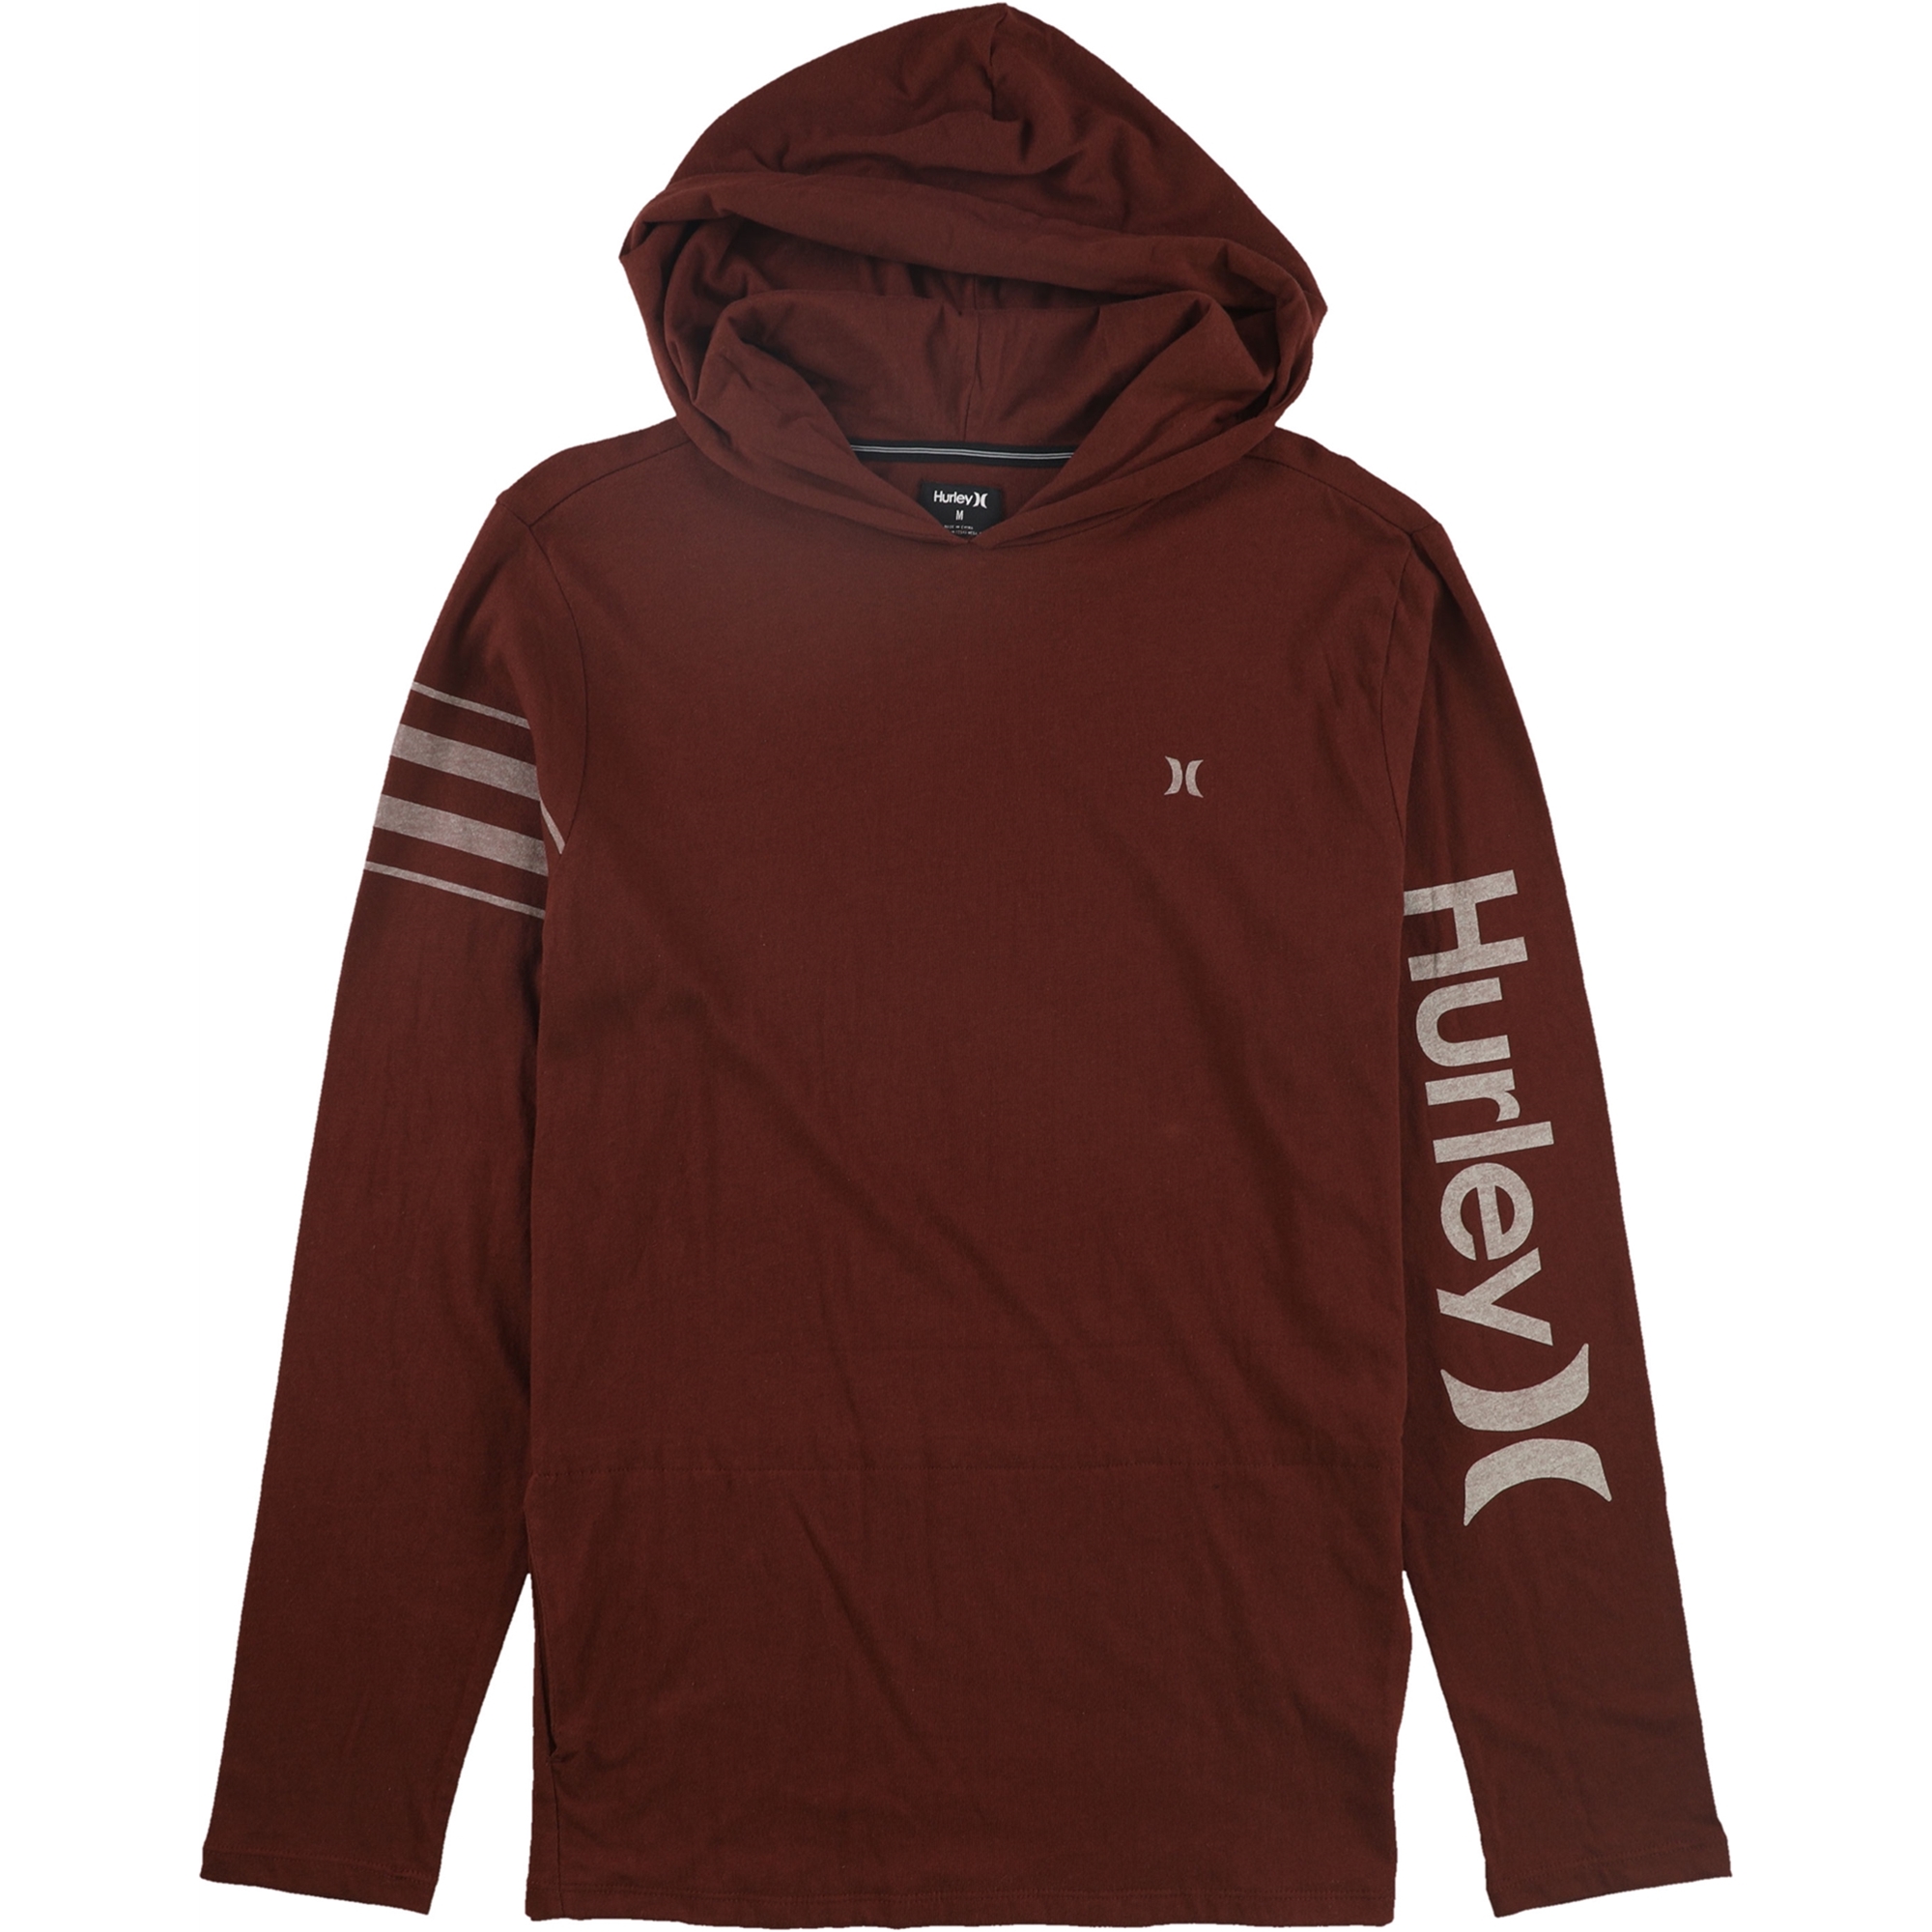 HURLEY Men/'s Pullover Hoodie Sweatshirt XX Large 2XL COOL GRAY 681